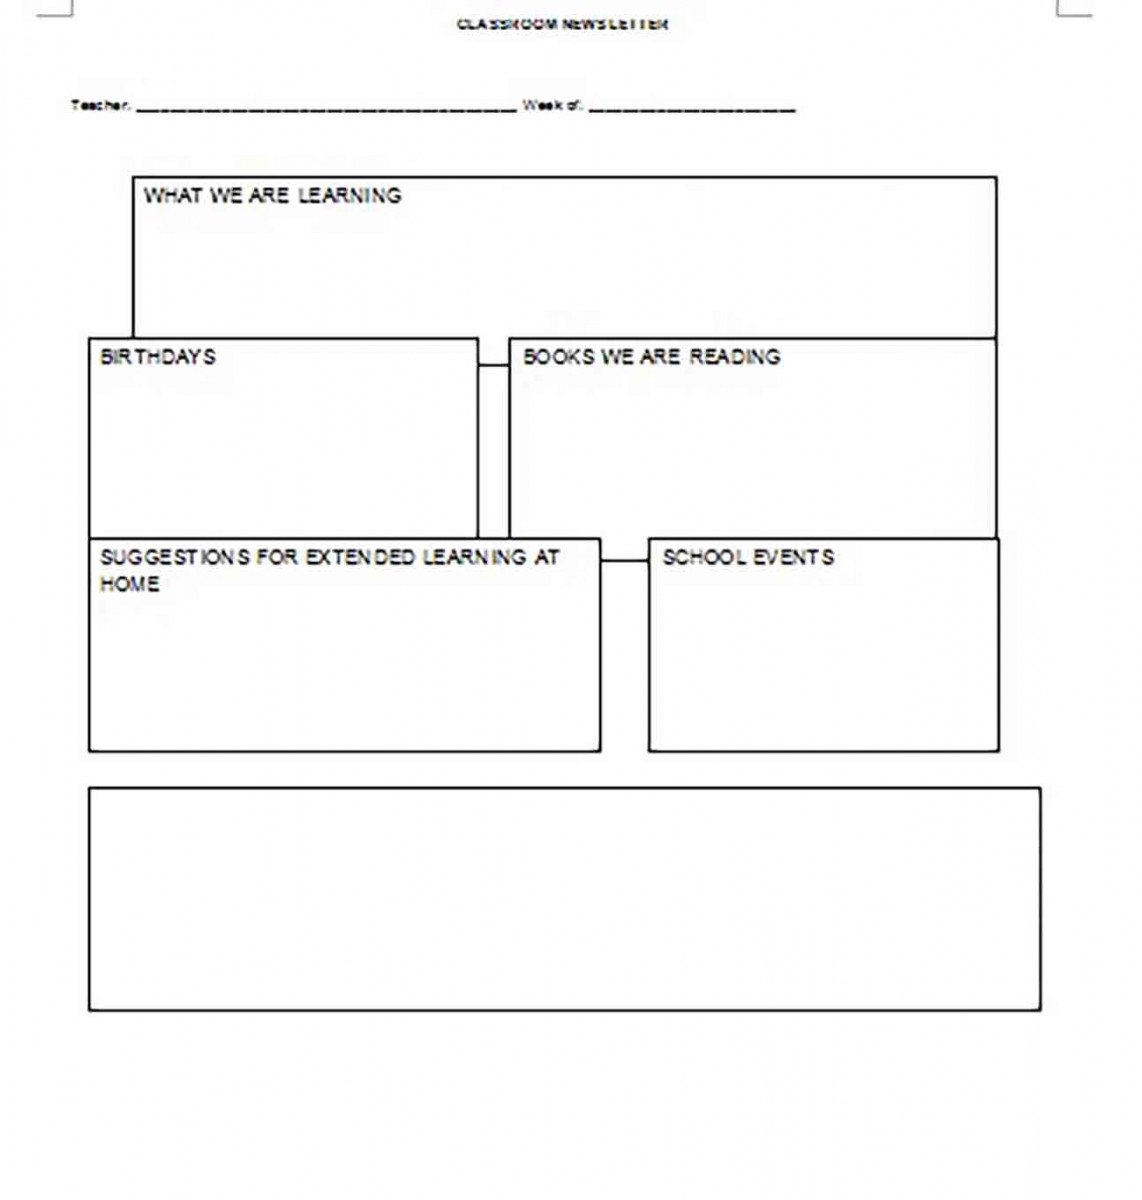 Classroom Newsletter templates